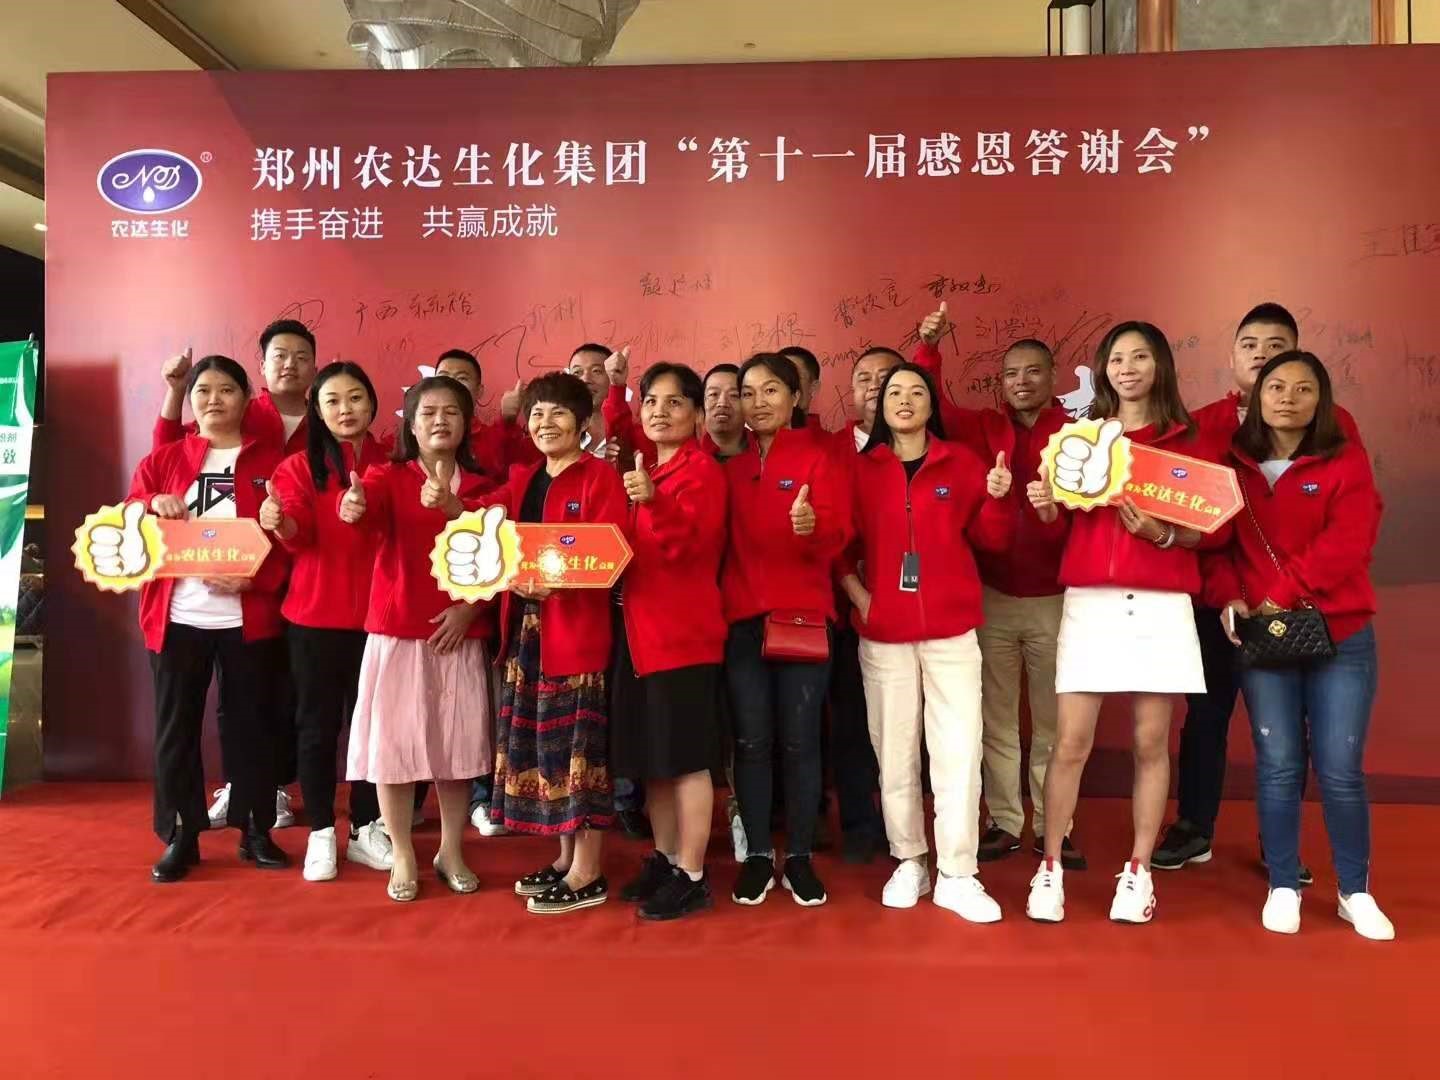 The 11th Return Banquet of Zhengzhou Nongda biochemical group was successfully held(图2)